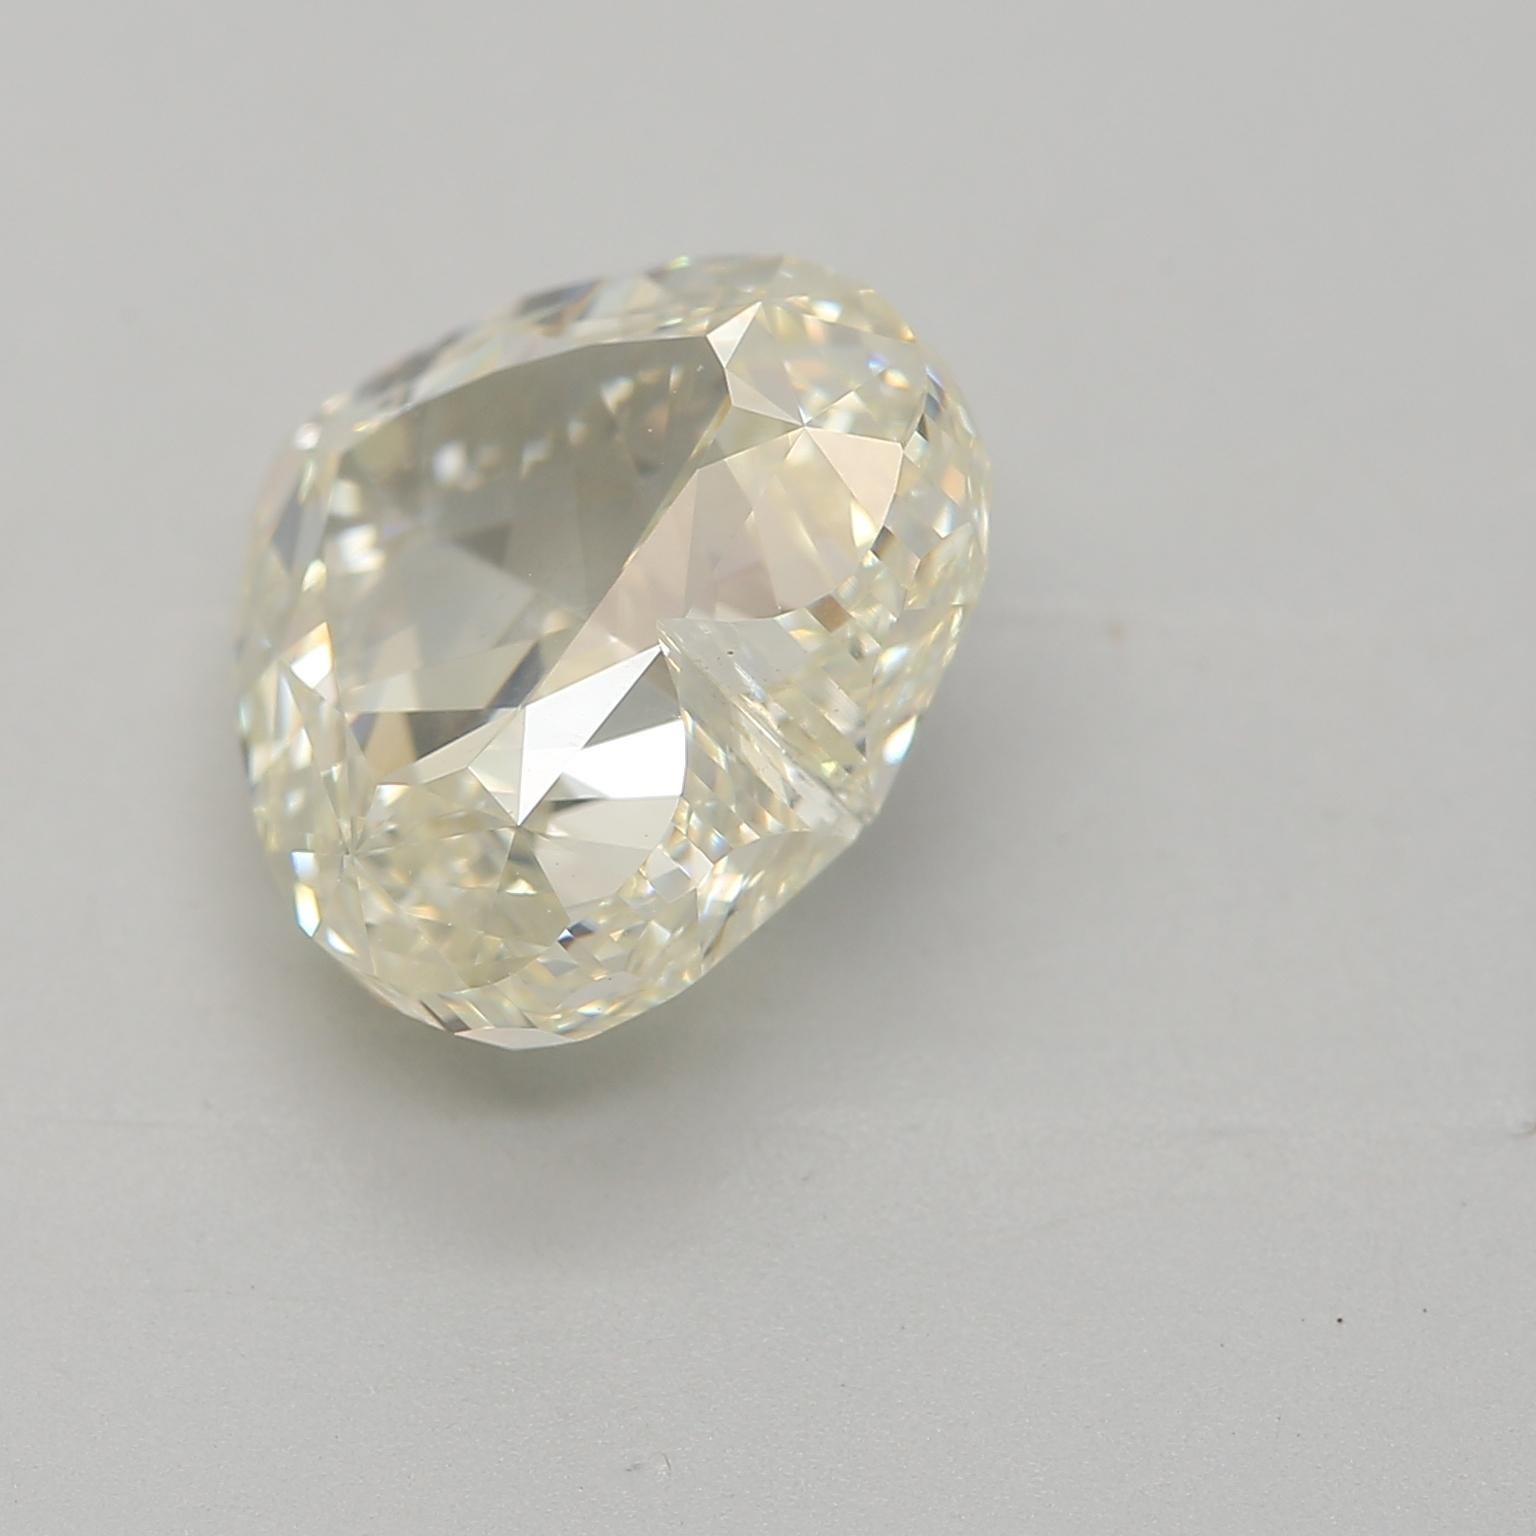 Heart Cut 3.00 Carat Heart shaped diamond VS1 Clarity GIA Certified For Sale